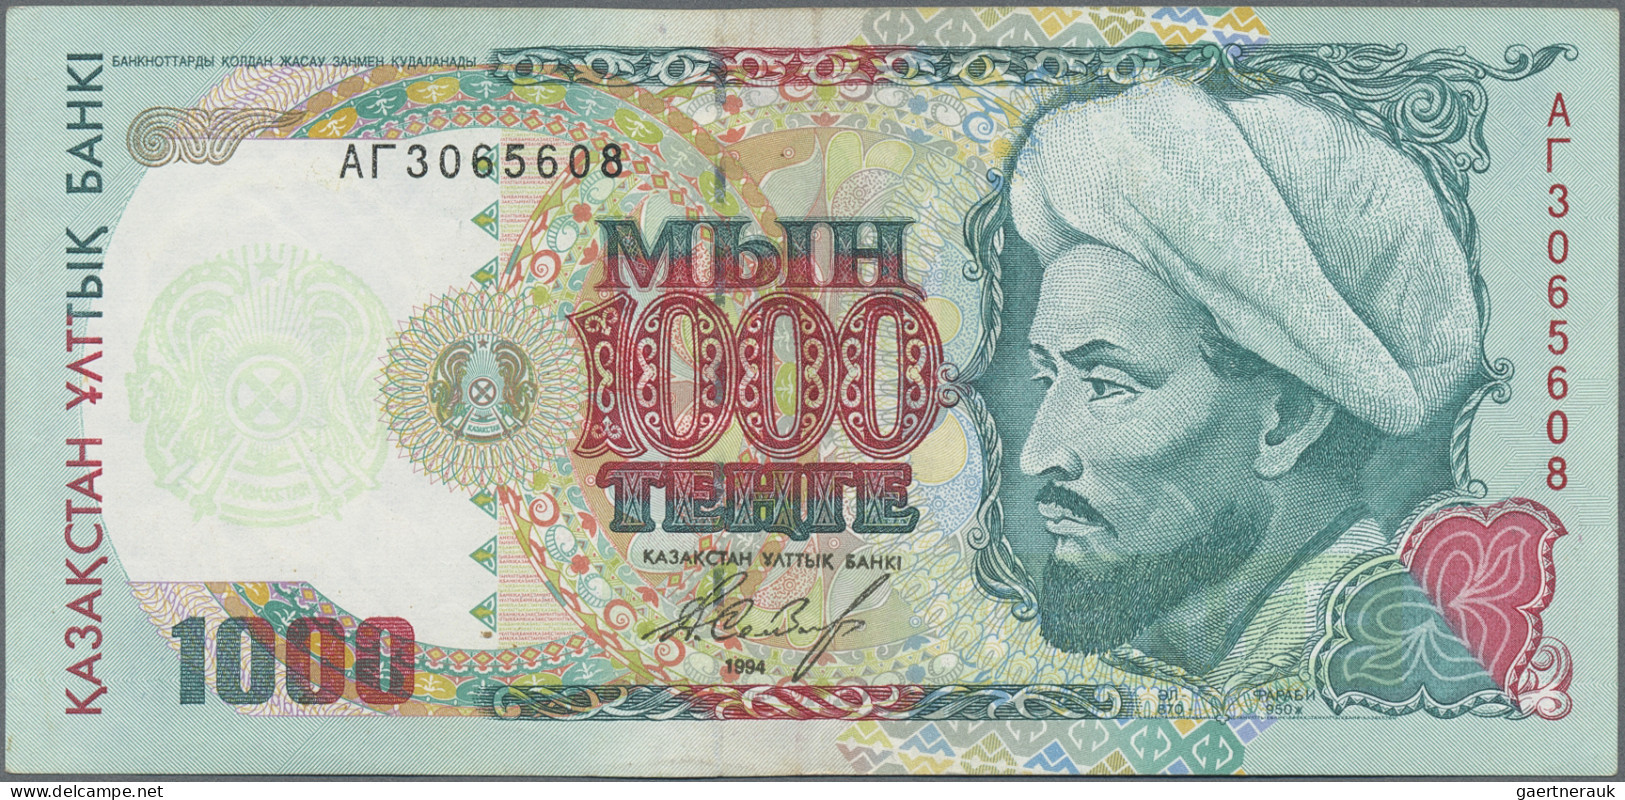 Kazakhstan: National Bank Of Kazakhstan, Huge Lot With 28 Banknotes, Series 1993 - Kazakhstan